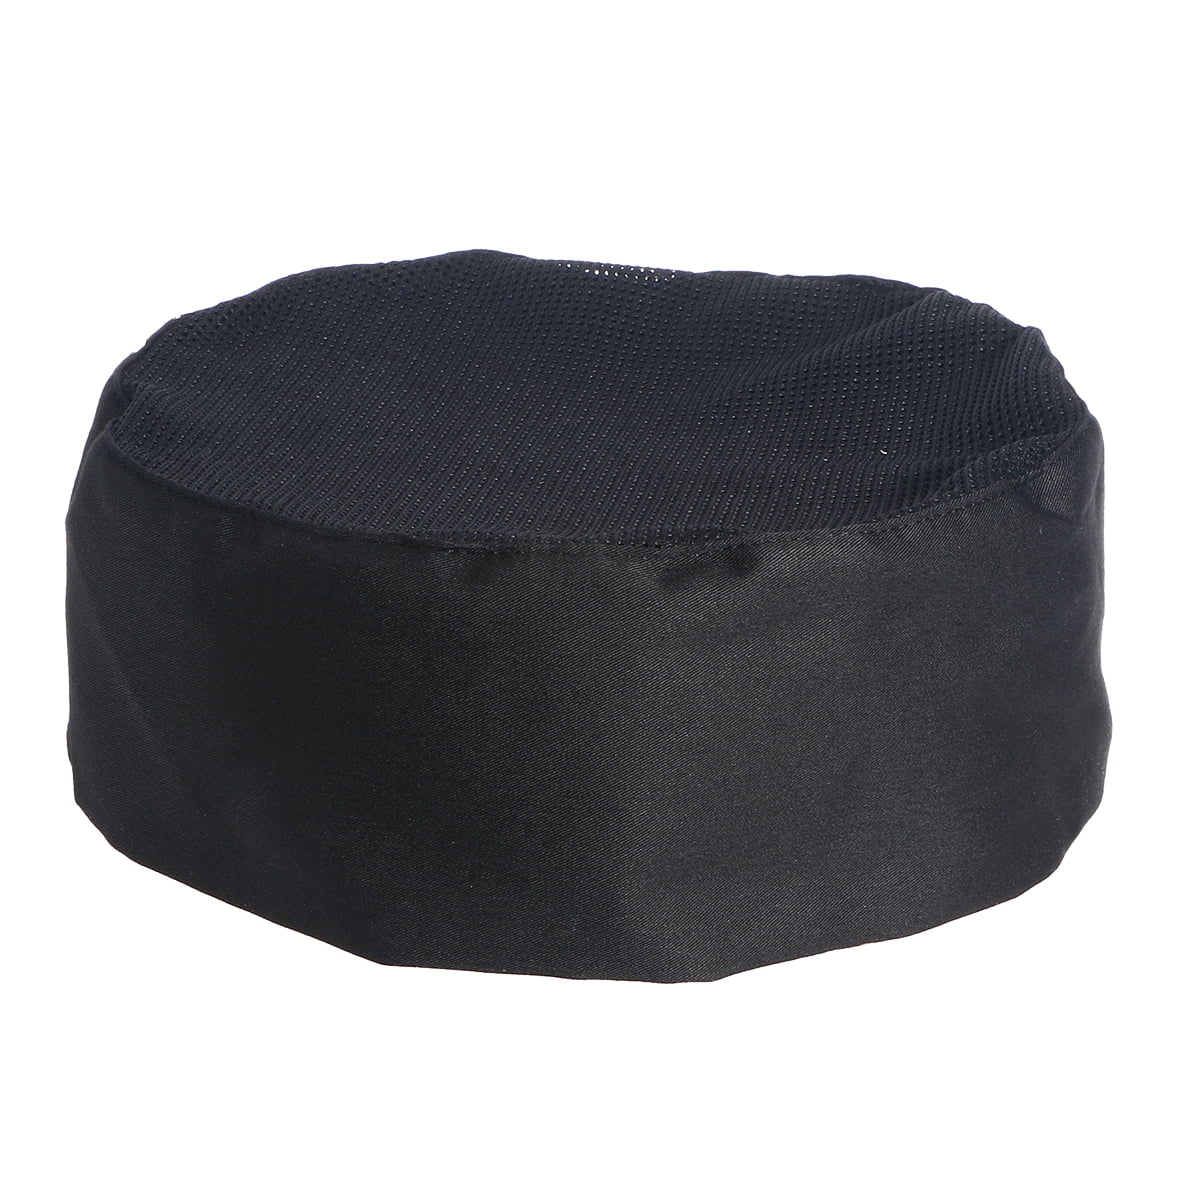 Black 3pcs Mesh Top Skull Cap Catering Chefs Kitchen Hat w/Adjustable Strap 